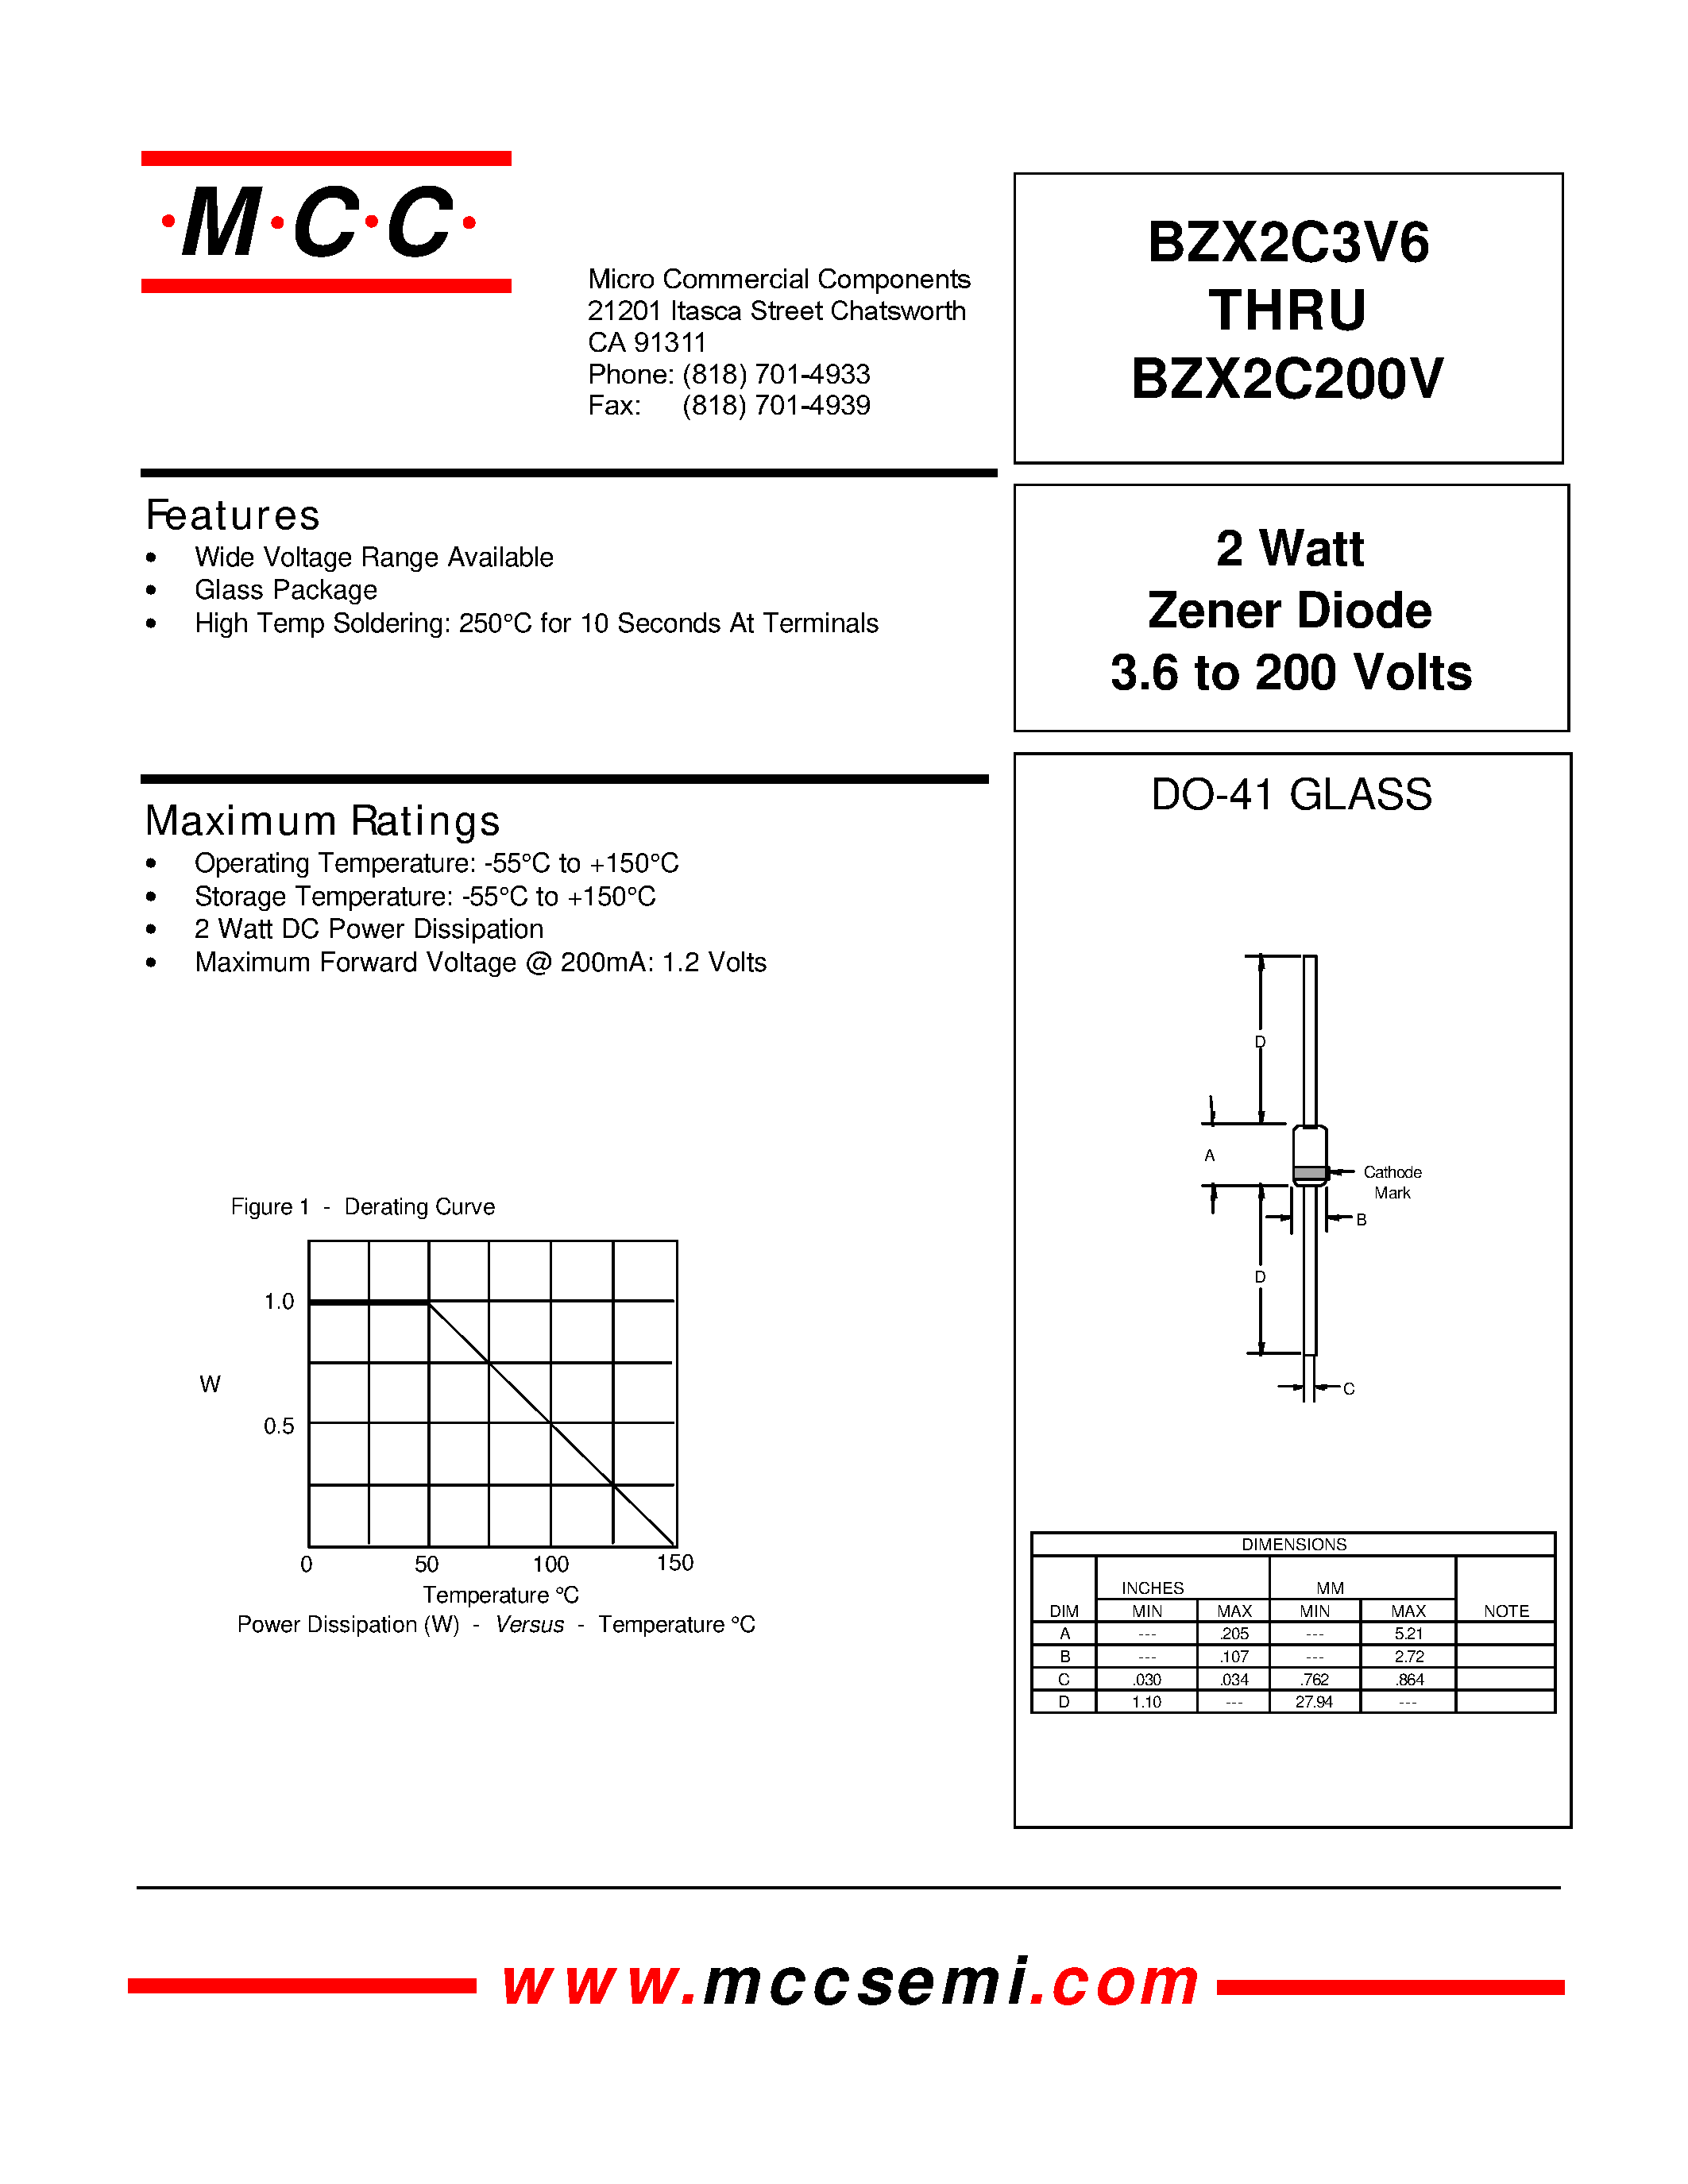 Даташит BZX2C91V - 2 Watt Zener Diode 3.6 to 200 Volts страница 1